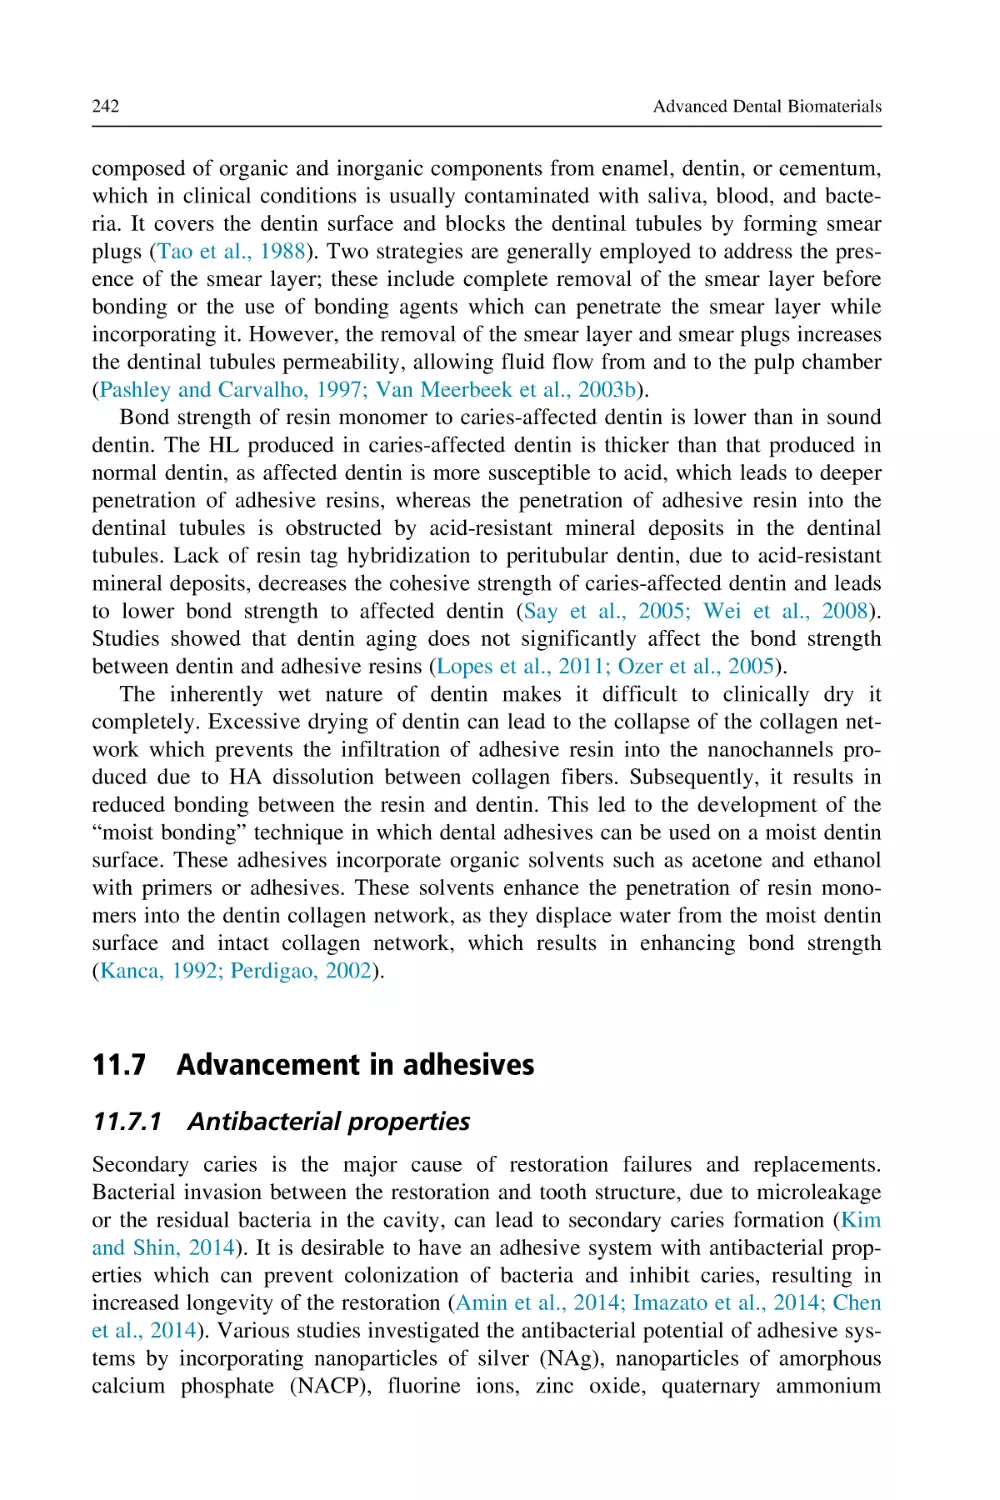 11.7 Advancement in adhesives
11.7.1 Antibacterial properties